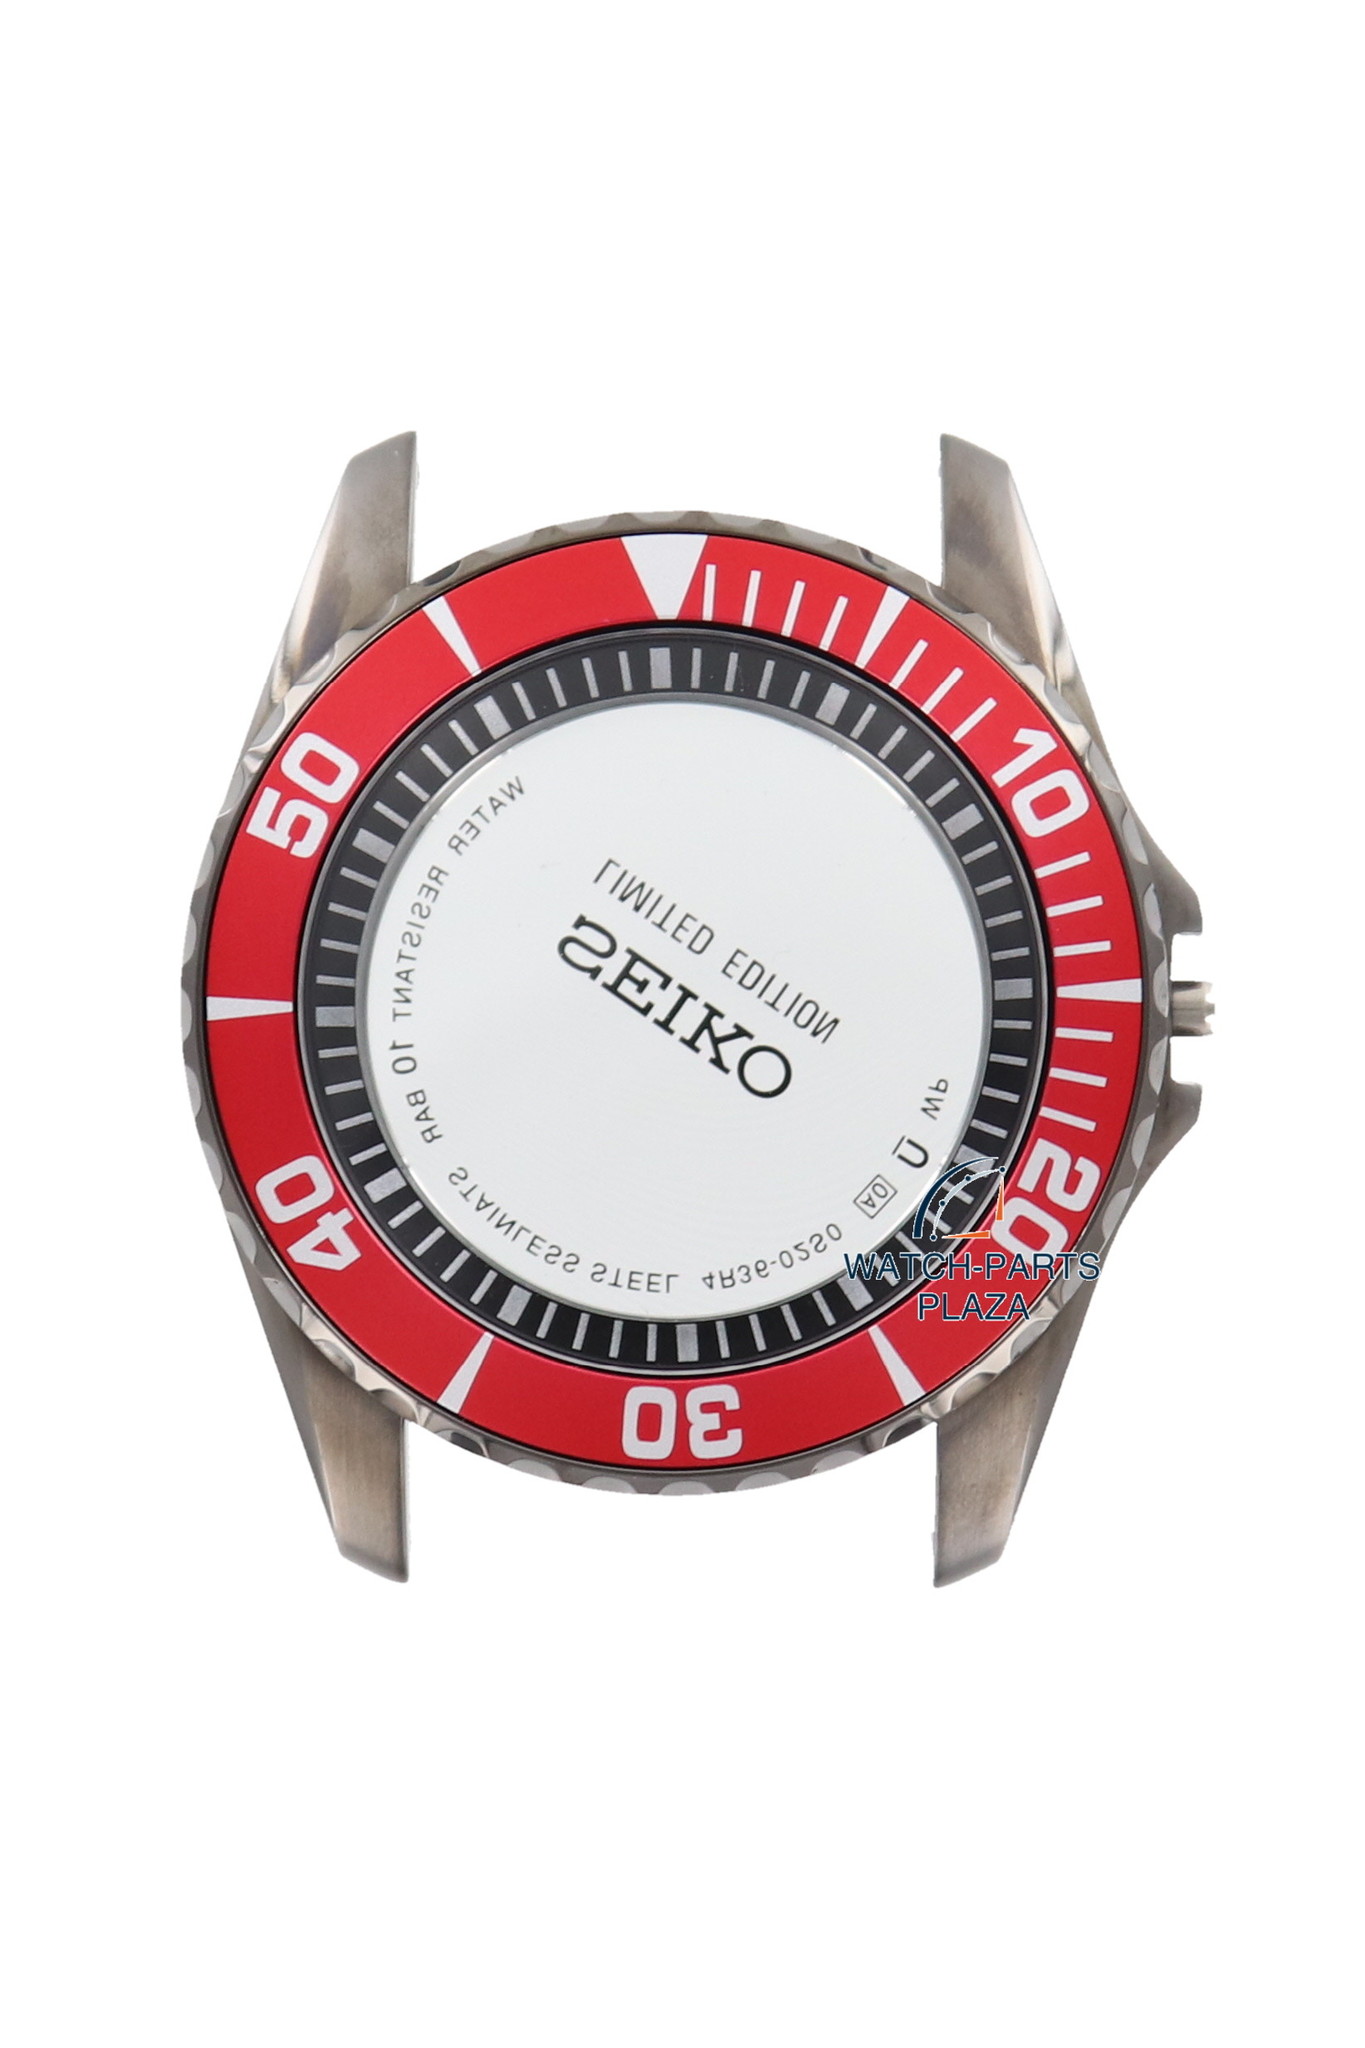 Seiko SRP501 Sea Urchin watch case 4R36-02S0 Red & Black - WatchPlaza